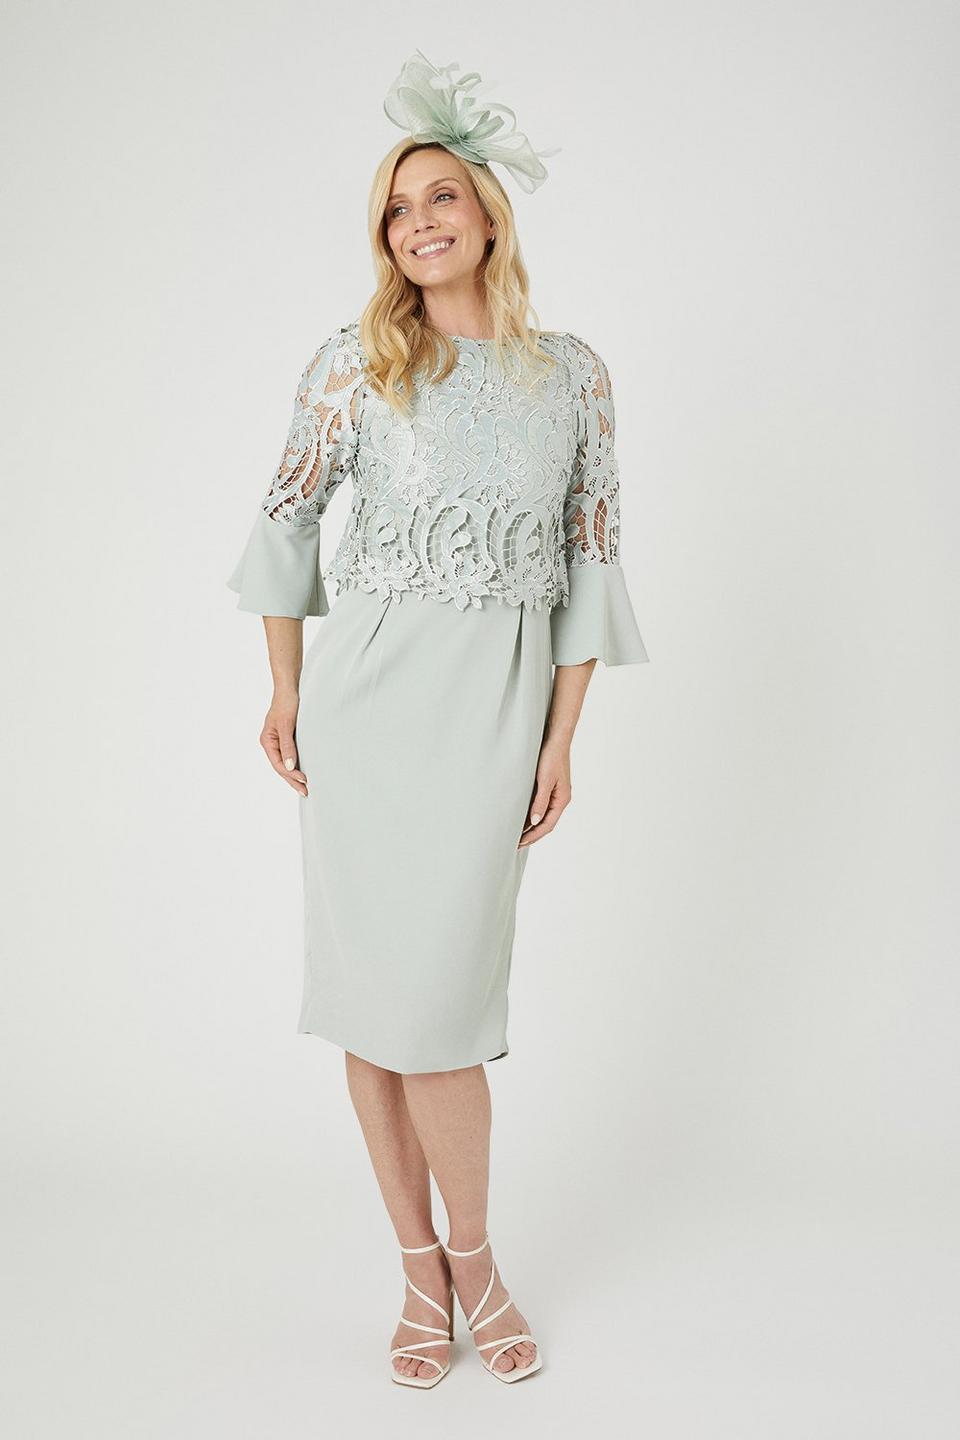 Dresses | Pencil Dress With Satin Lace Bodice & Flare Cuff | Coast